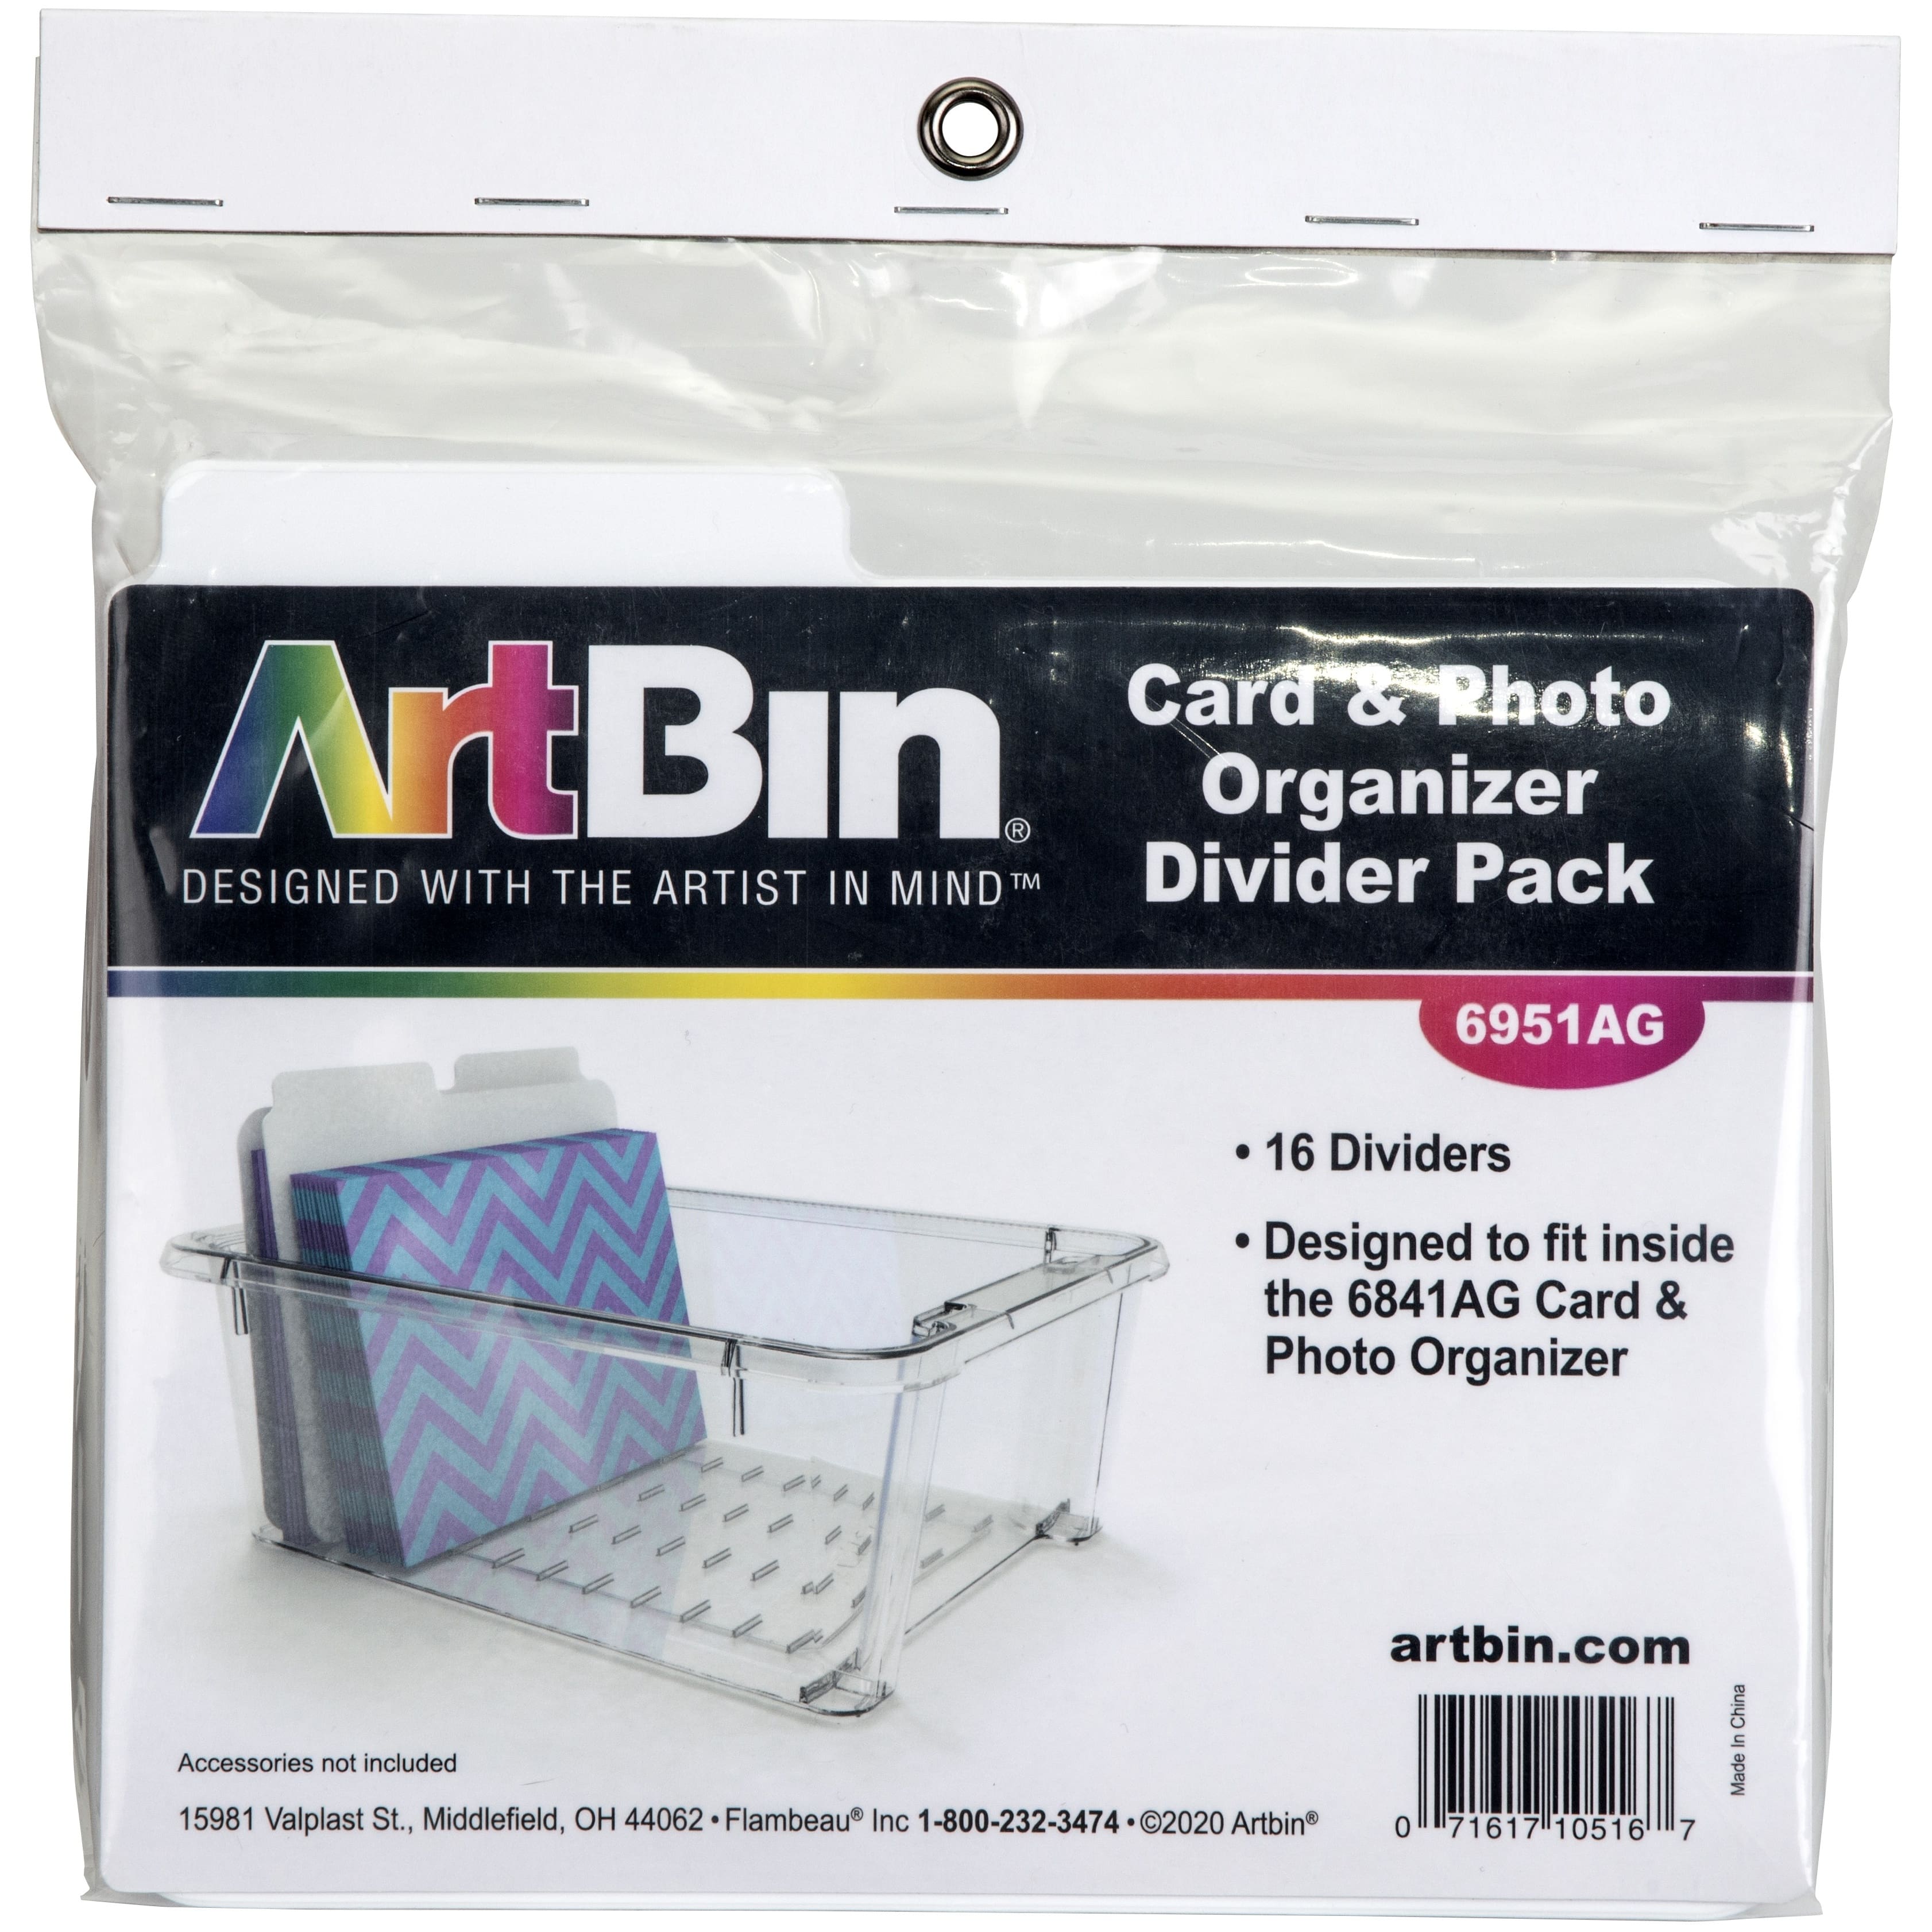 Artbin Card & Photo Organizer Divider Pack